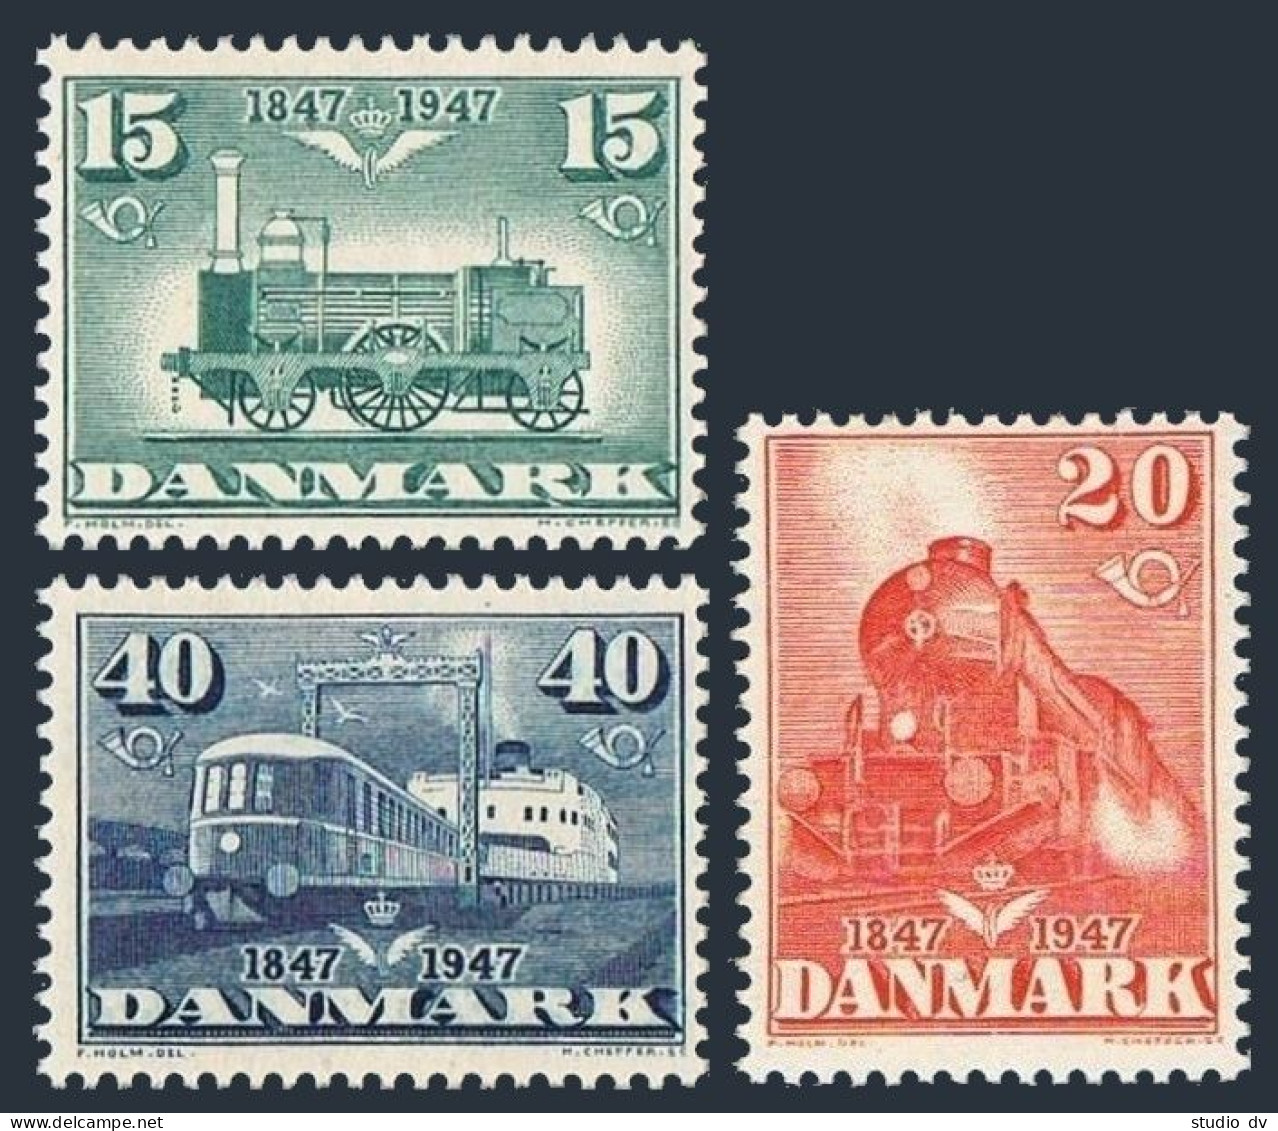 Denmark 301-303,MNH.Michel 298-300. Danish State Railway,1947.Locomotive,Ship. - Nuovi